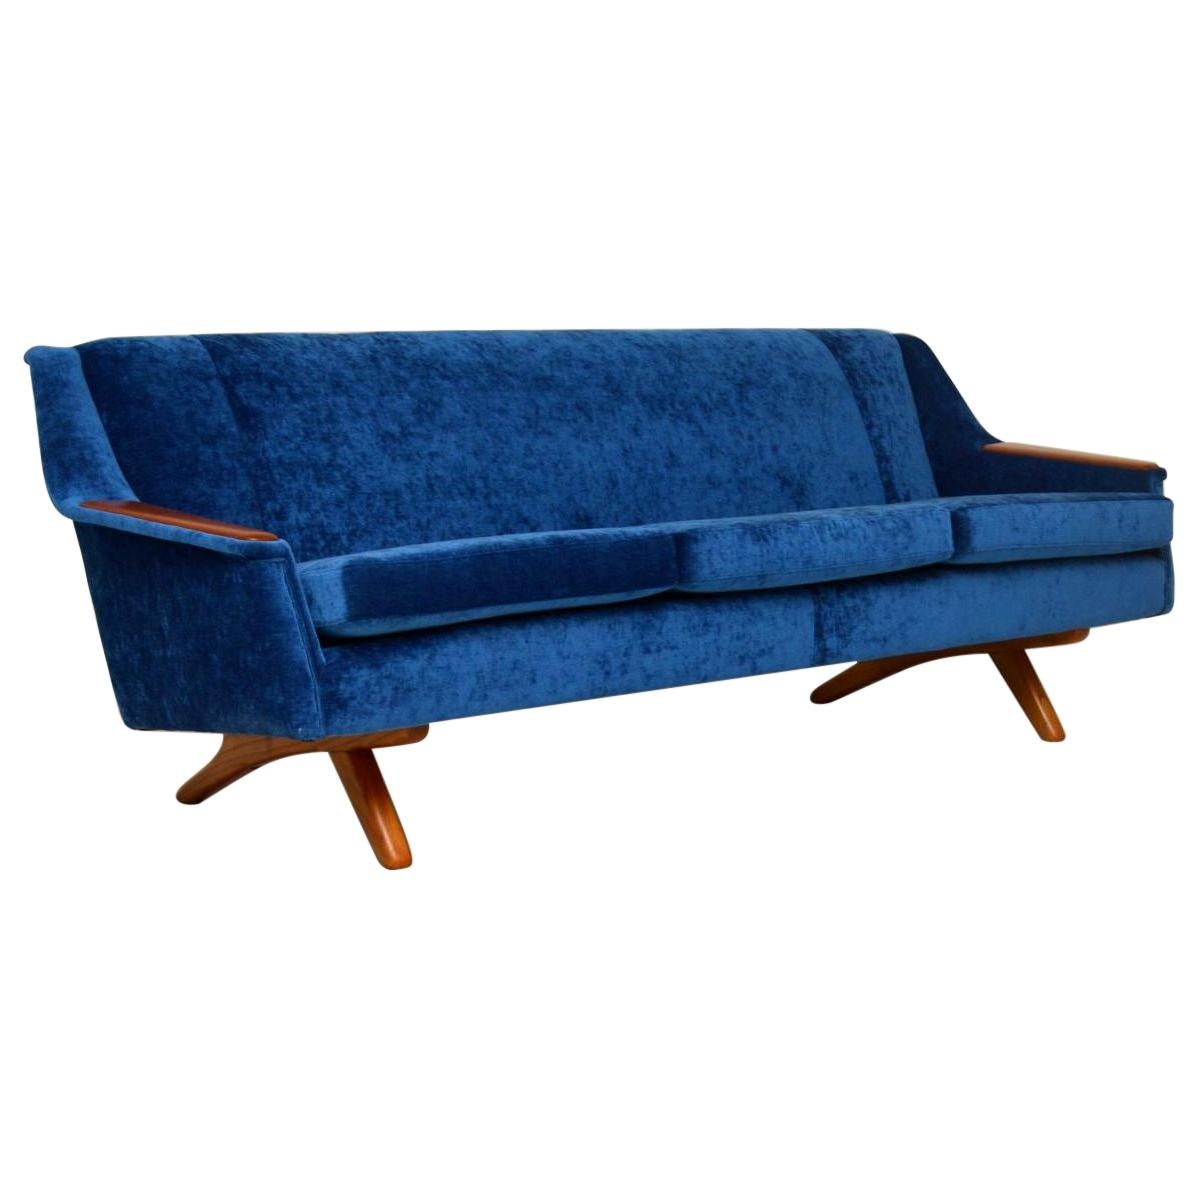 1960s Vintage Sofa by Illum Wikkelso for Westnofa